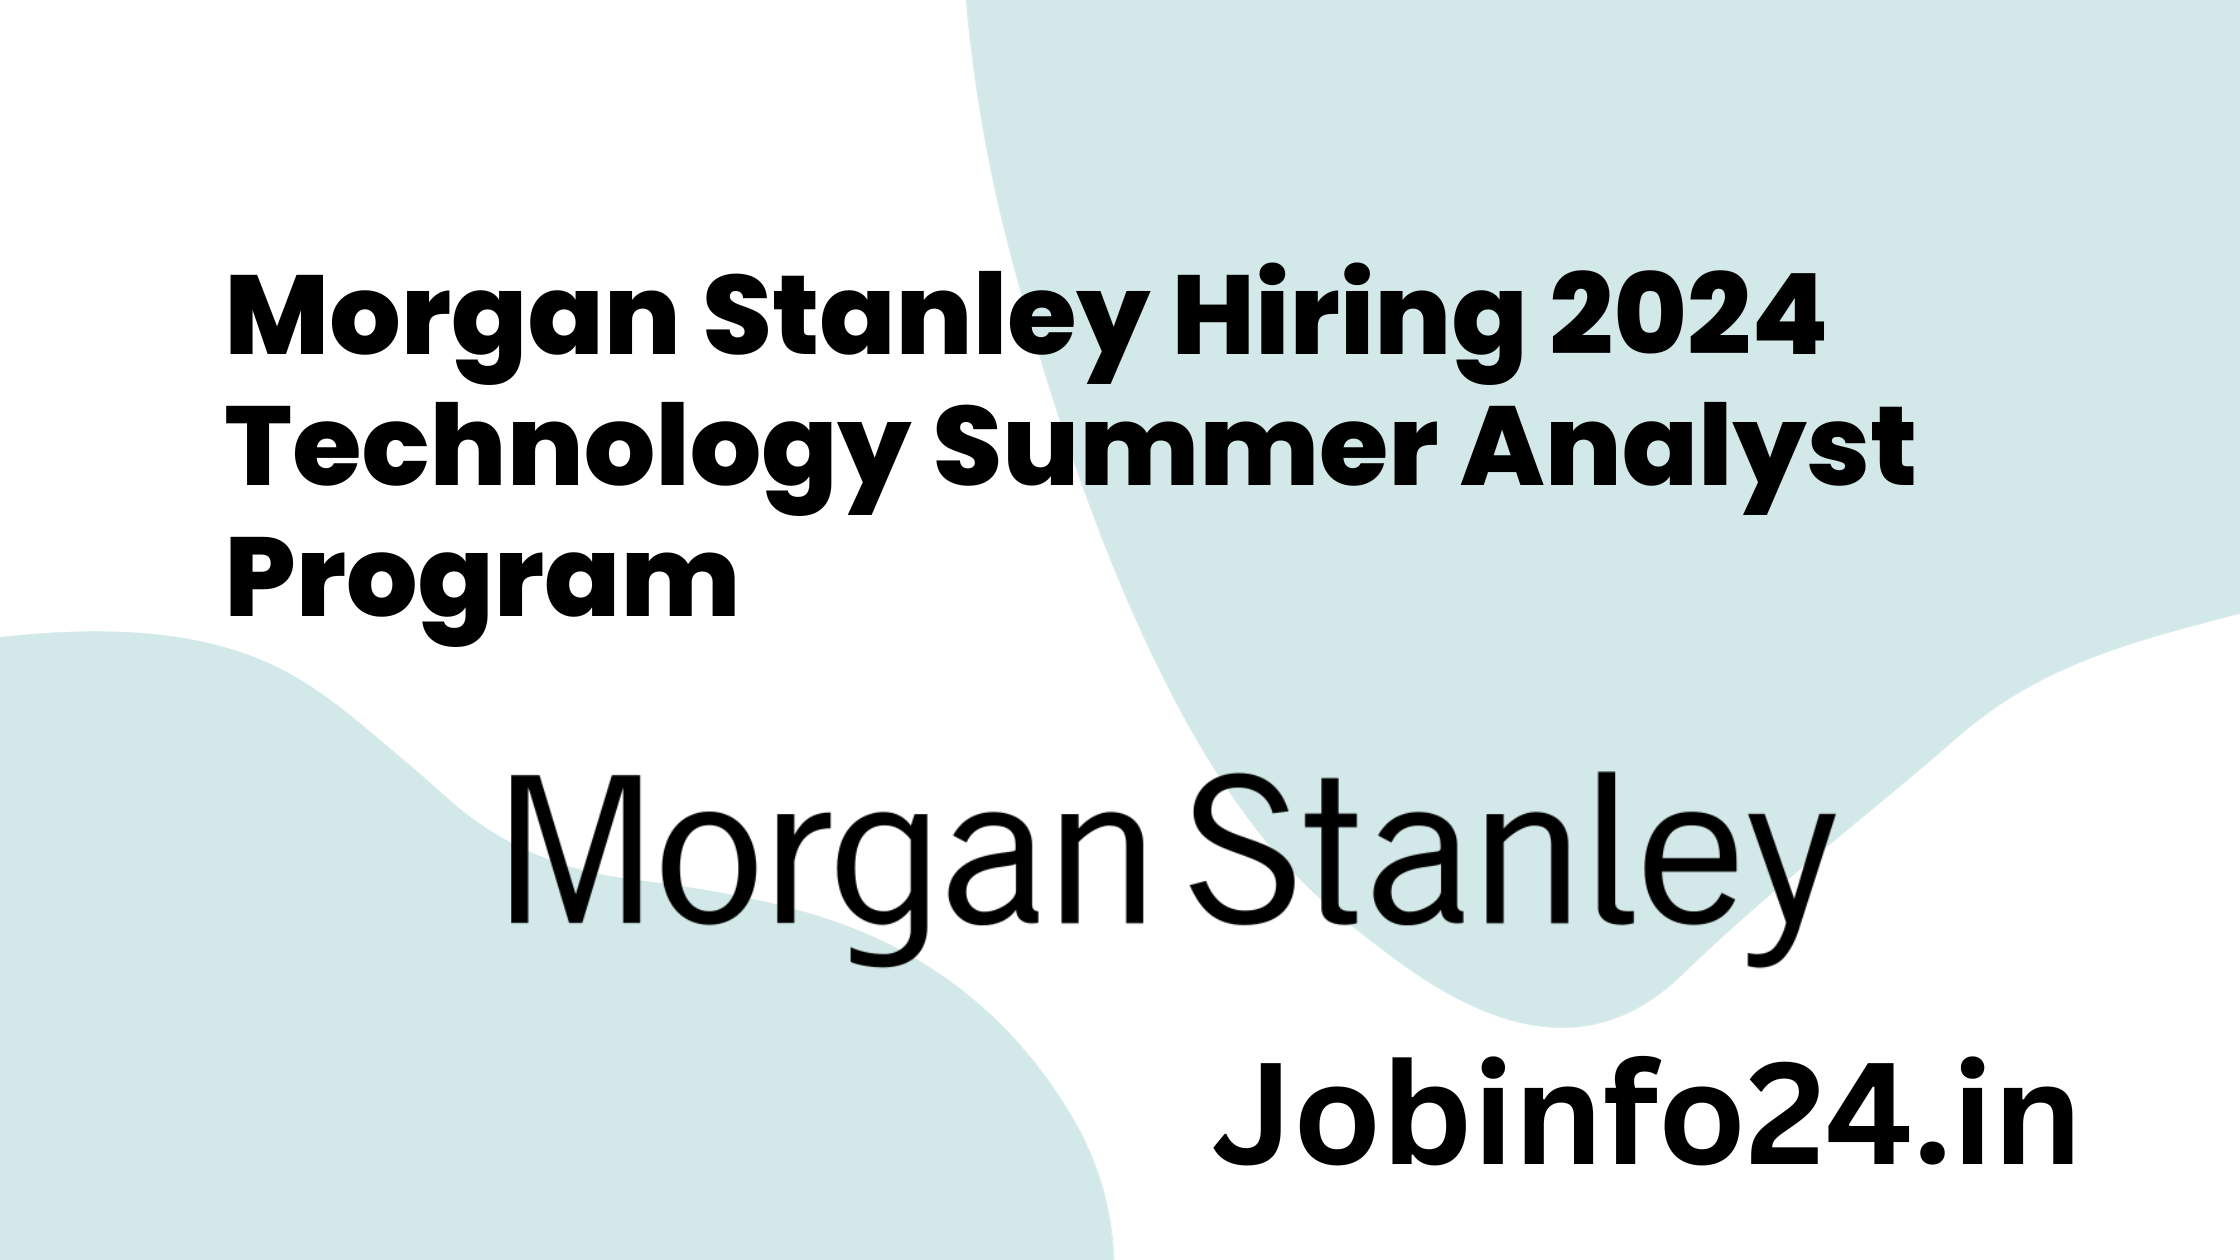 Morgan Stanley Hiring 2024 Technology Summer Analyst Program